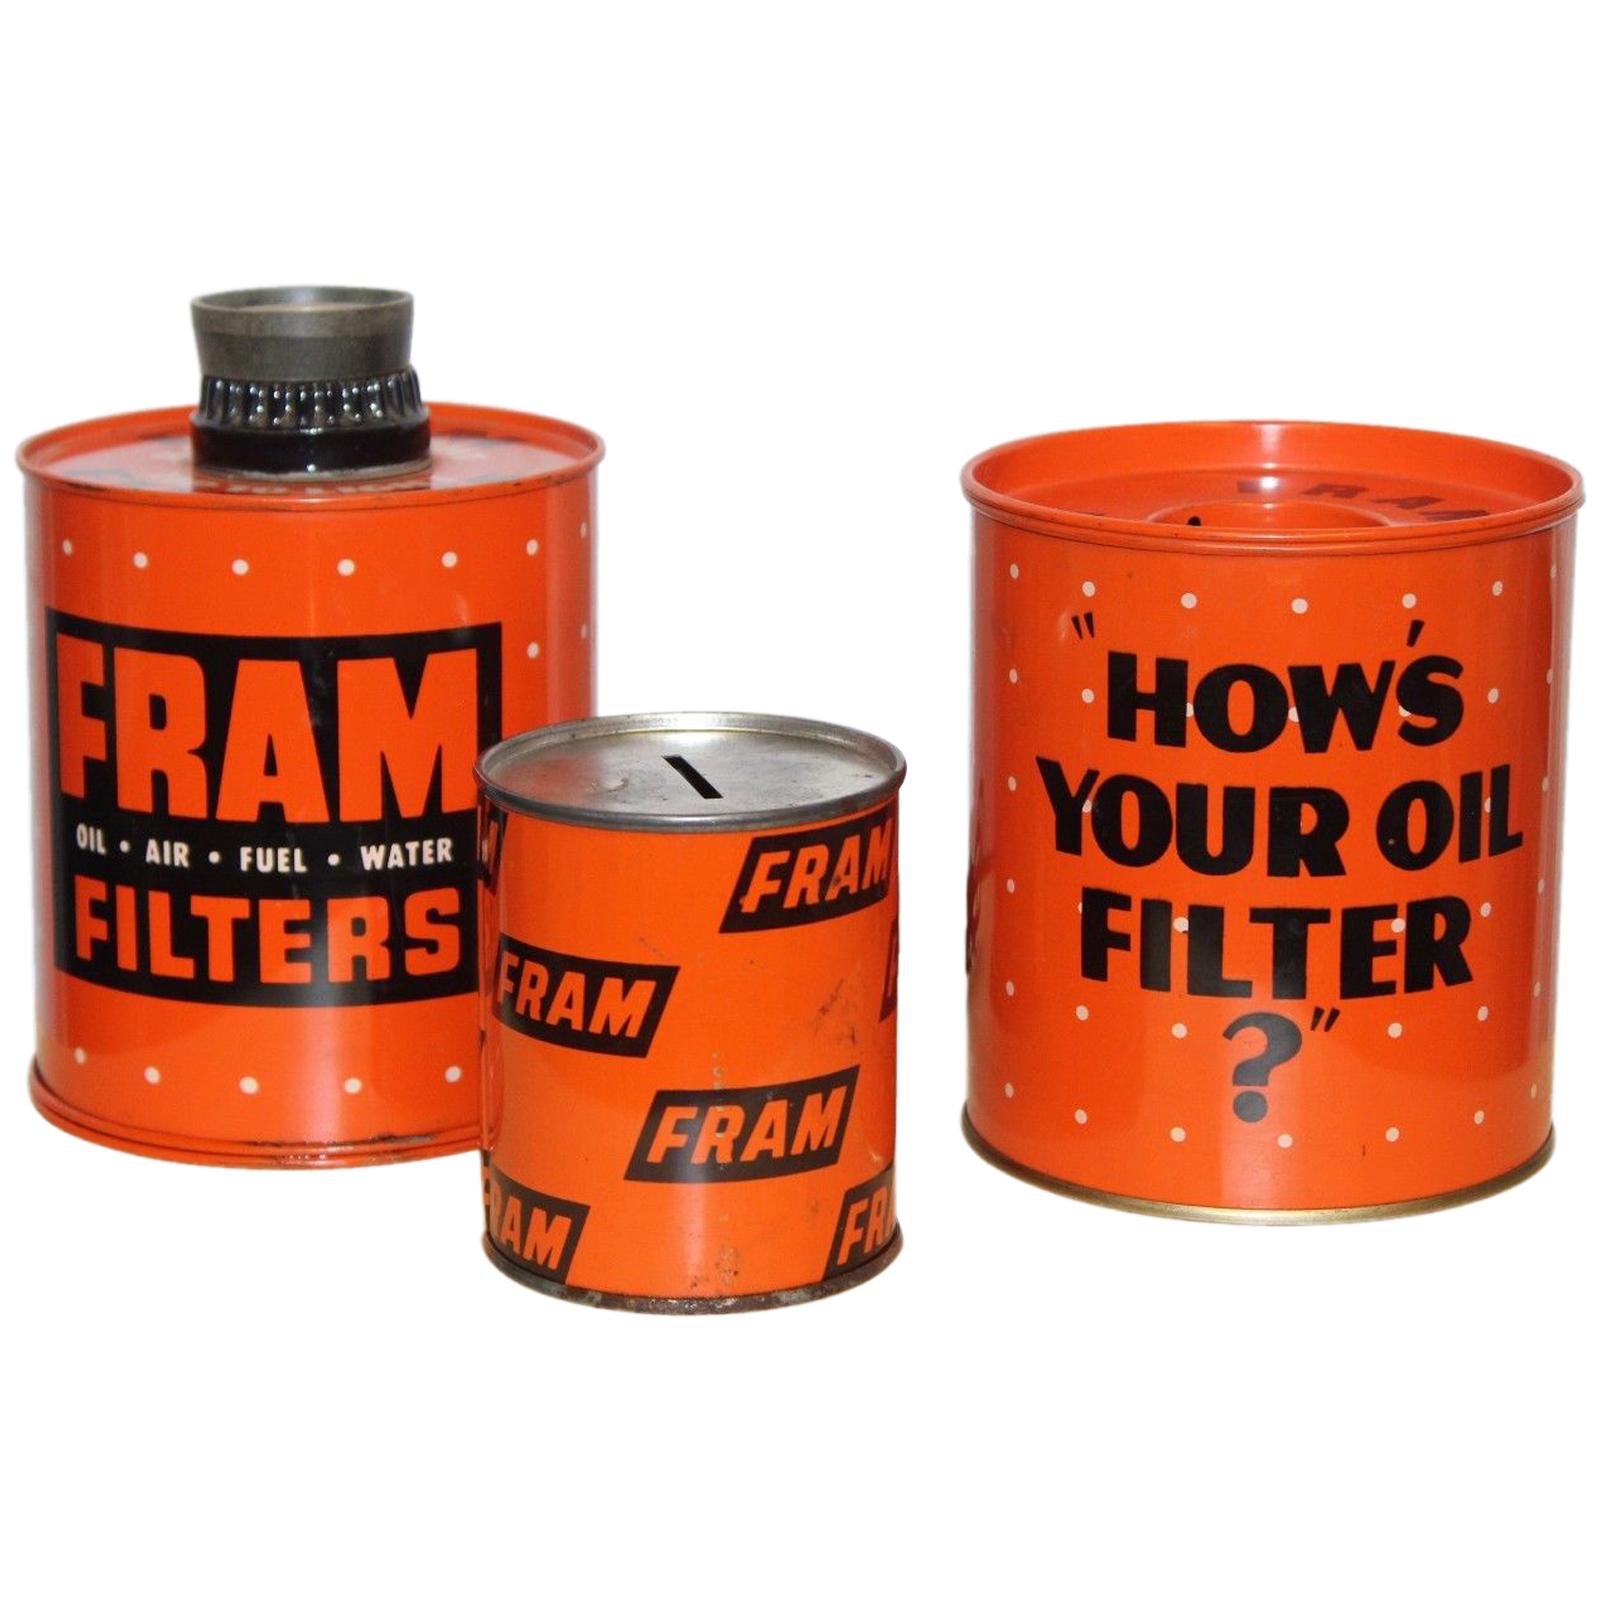 1950s-1960s Fram Oil Filter Cigarette Lighter, Ashtray and Coin Bank For Sale